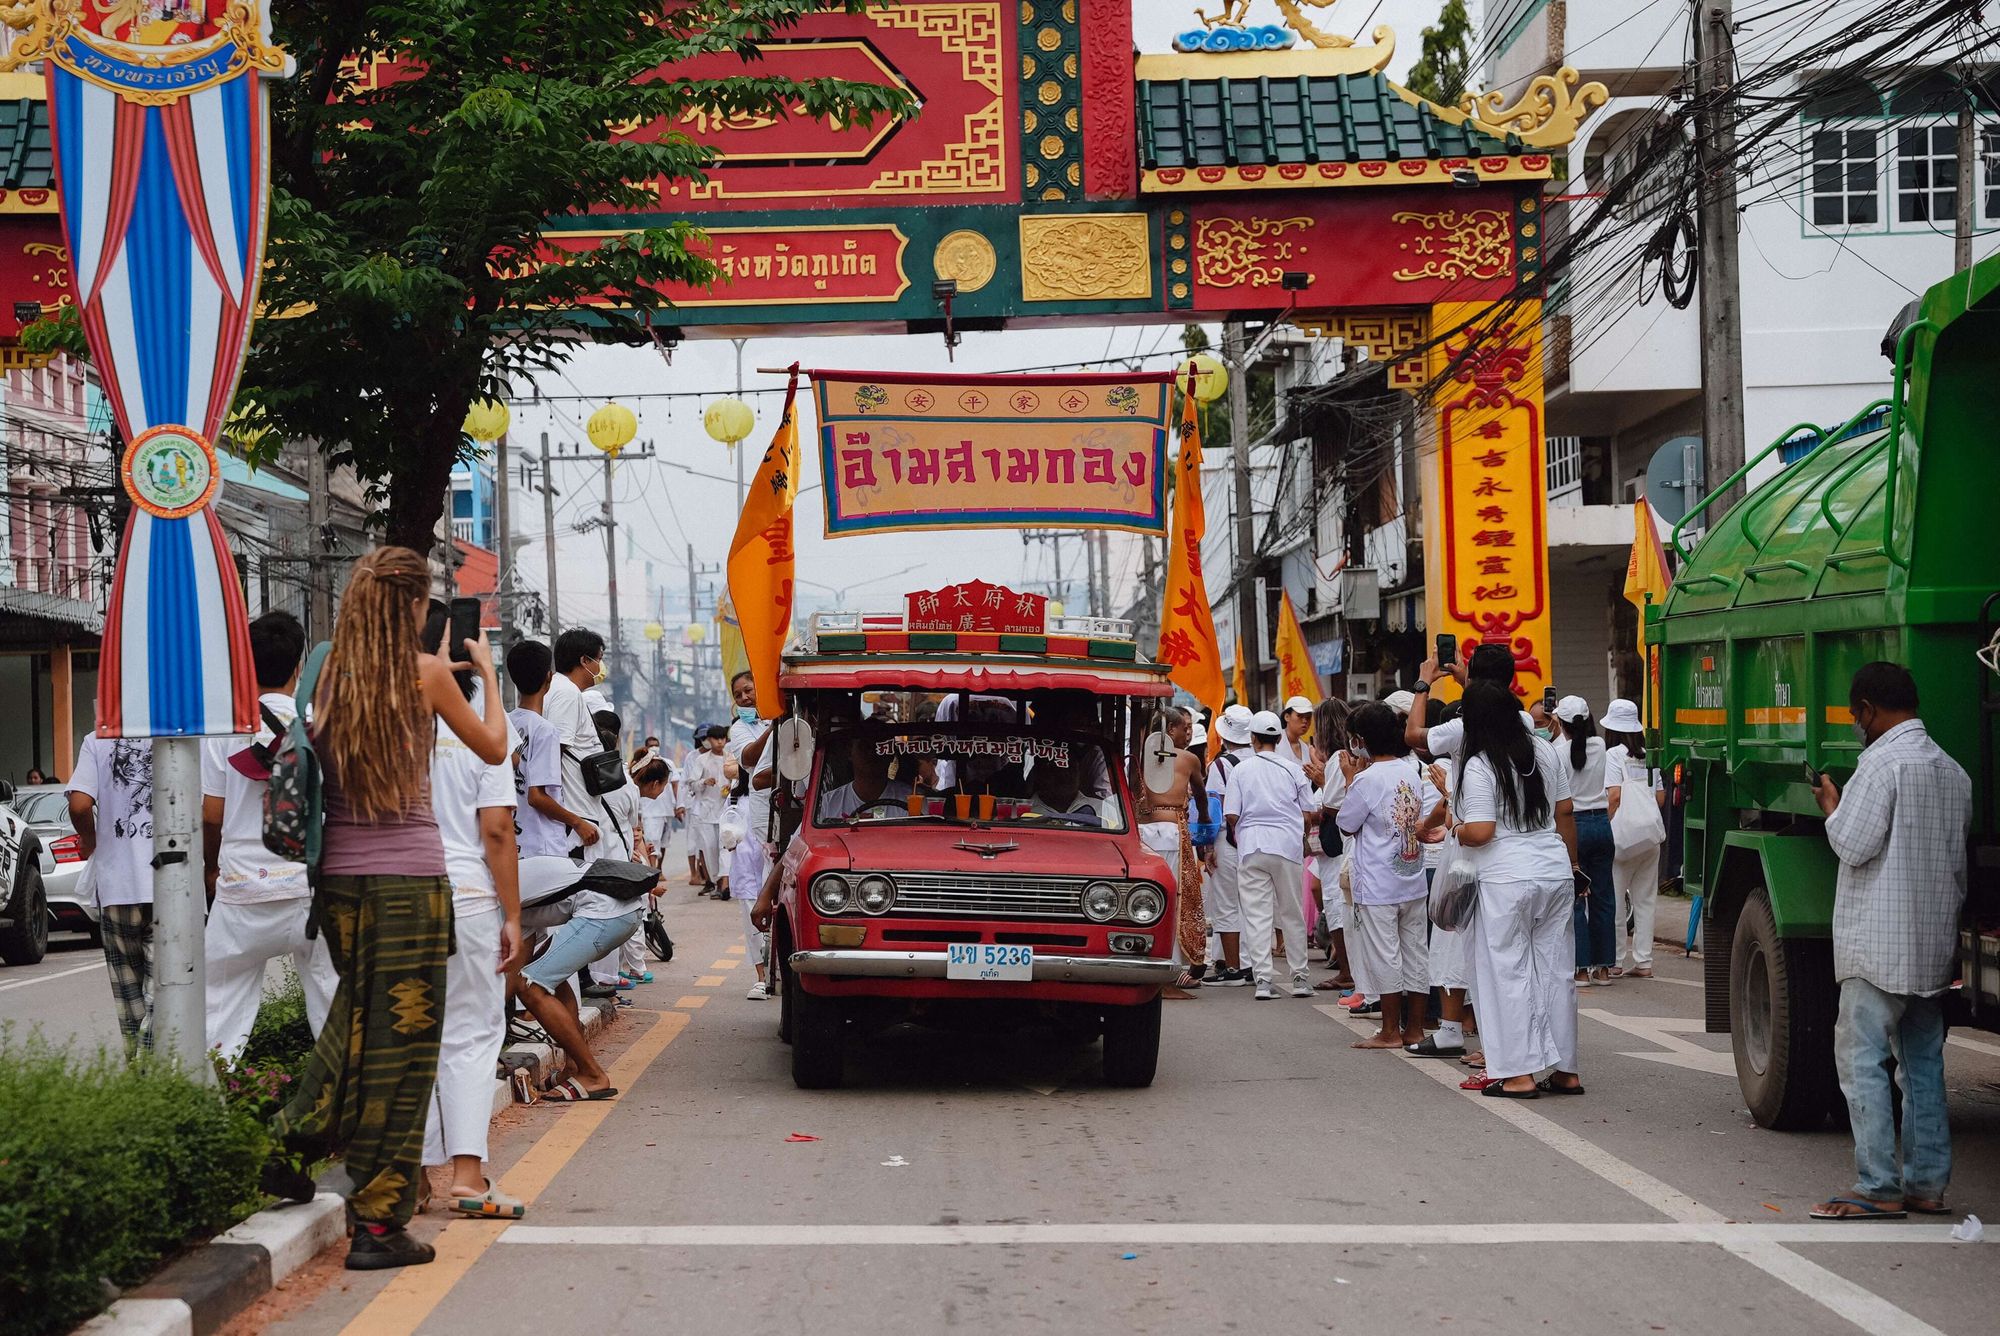 A street festival in Thailand